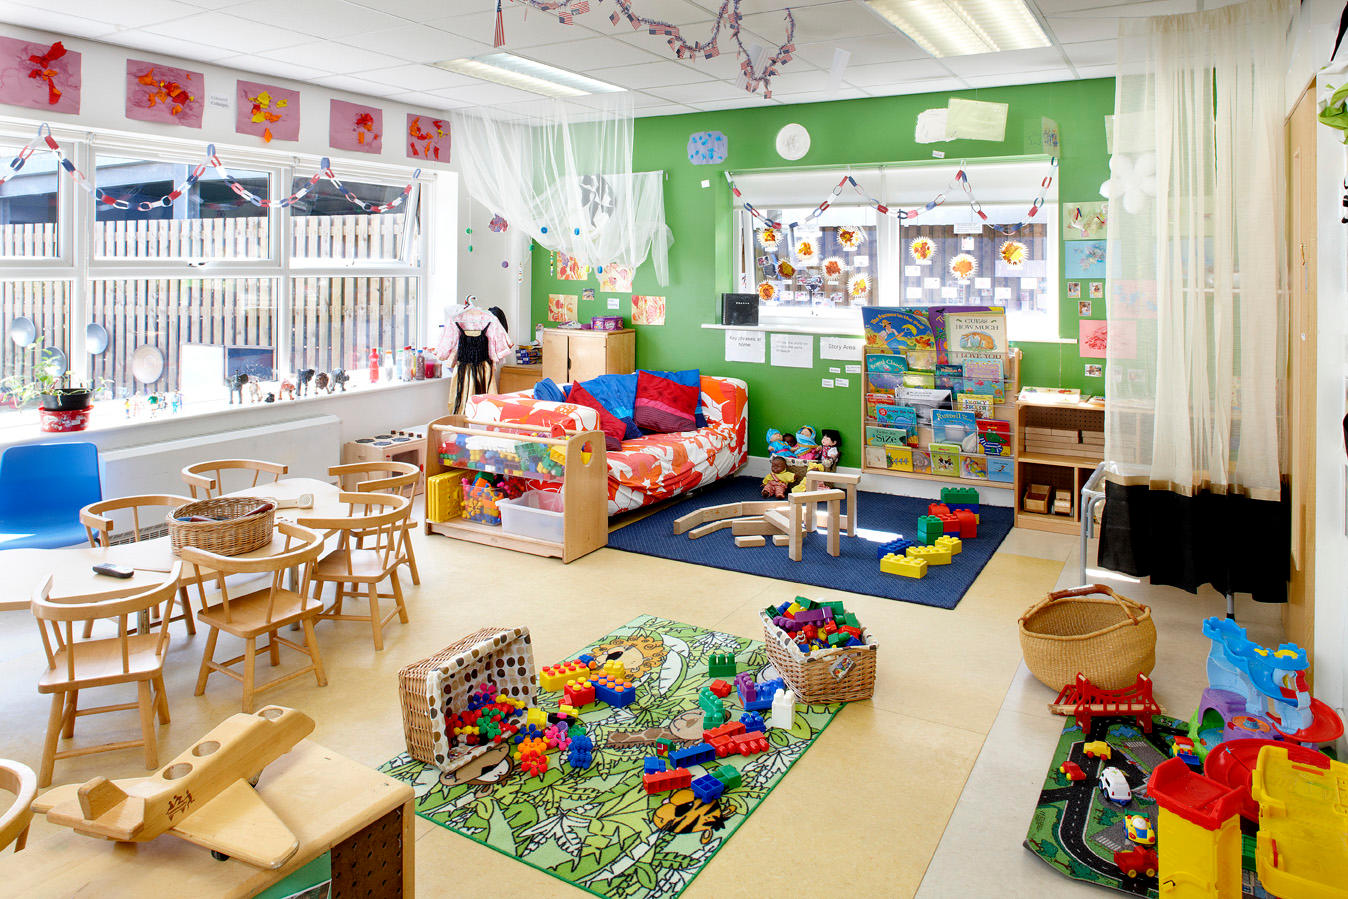 Bright Horizons Broadgreen Day Nursery and Preschool Liverpool 03334 149554